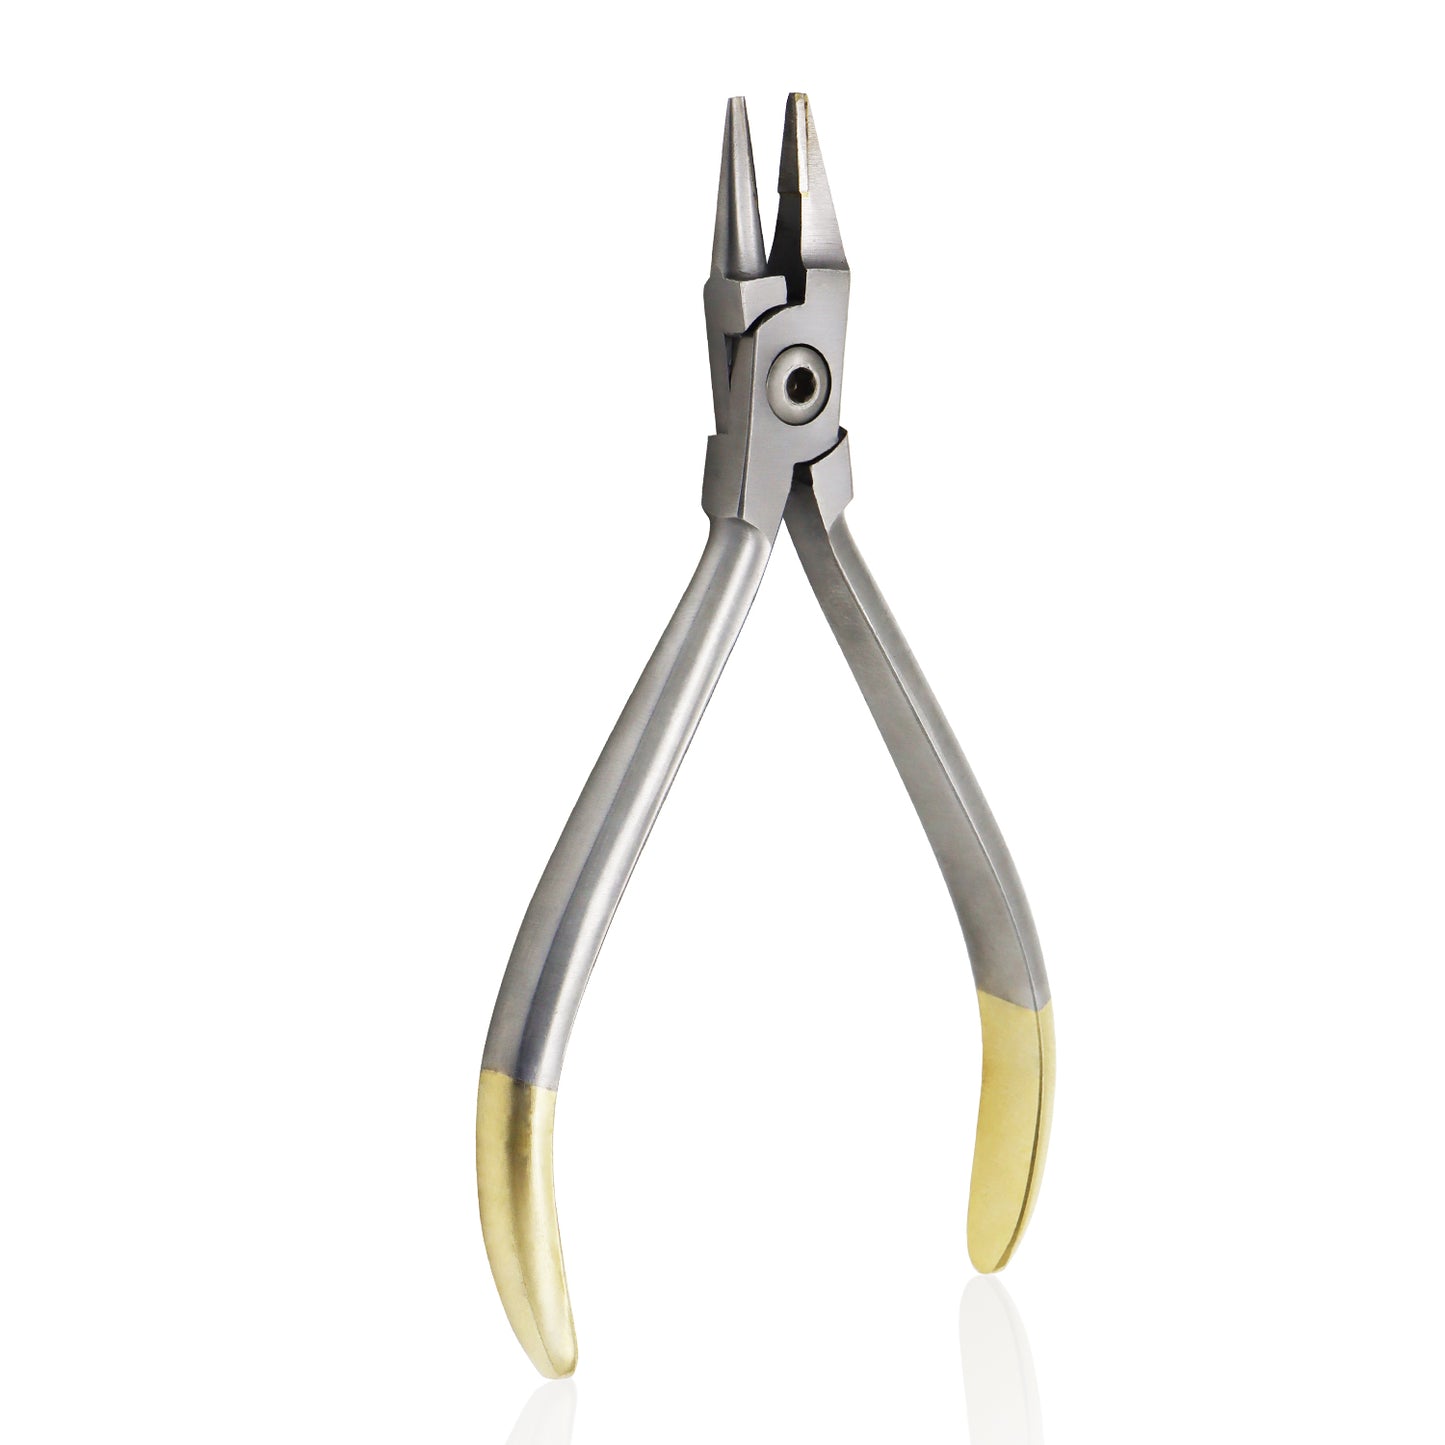 Protector Orthodontic Wire Bending Loop Forming Pliers Stainless Steel Orthodontic Instrument